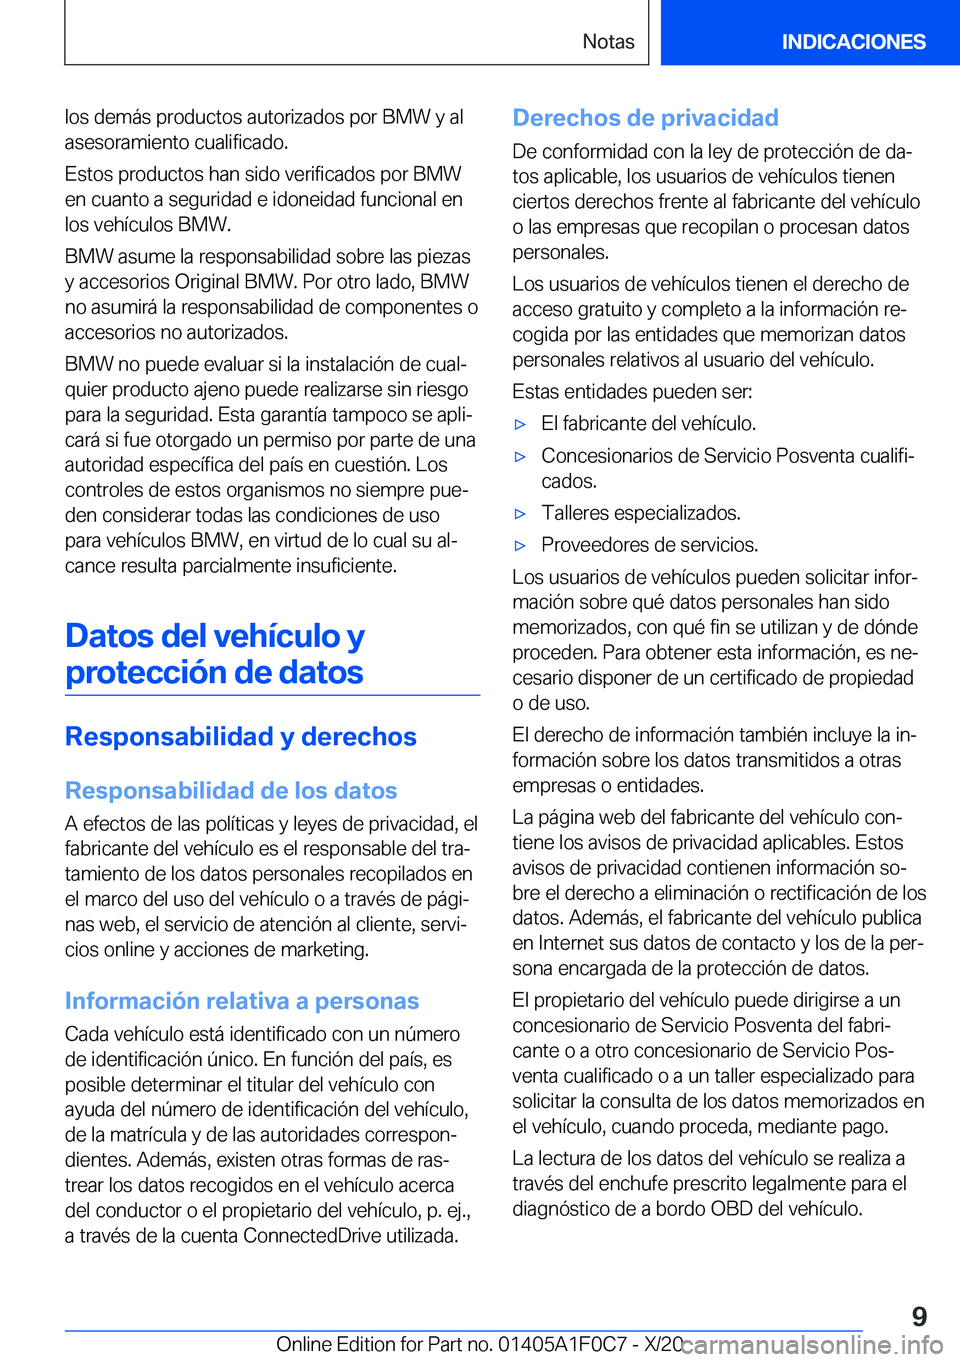 BMW X6 2021  Manuales de Empleo (in Spanish) �l�o�s��d�e�m�